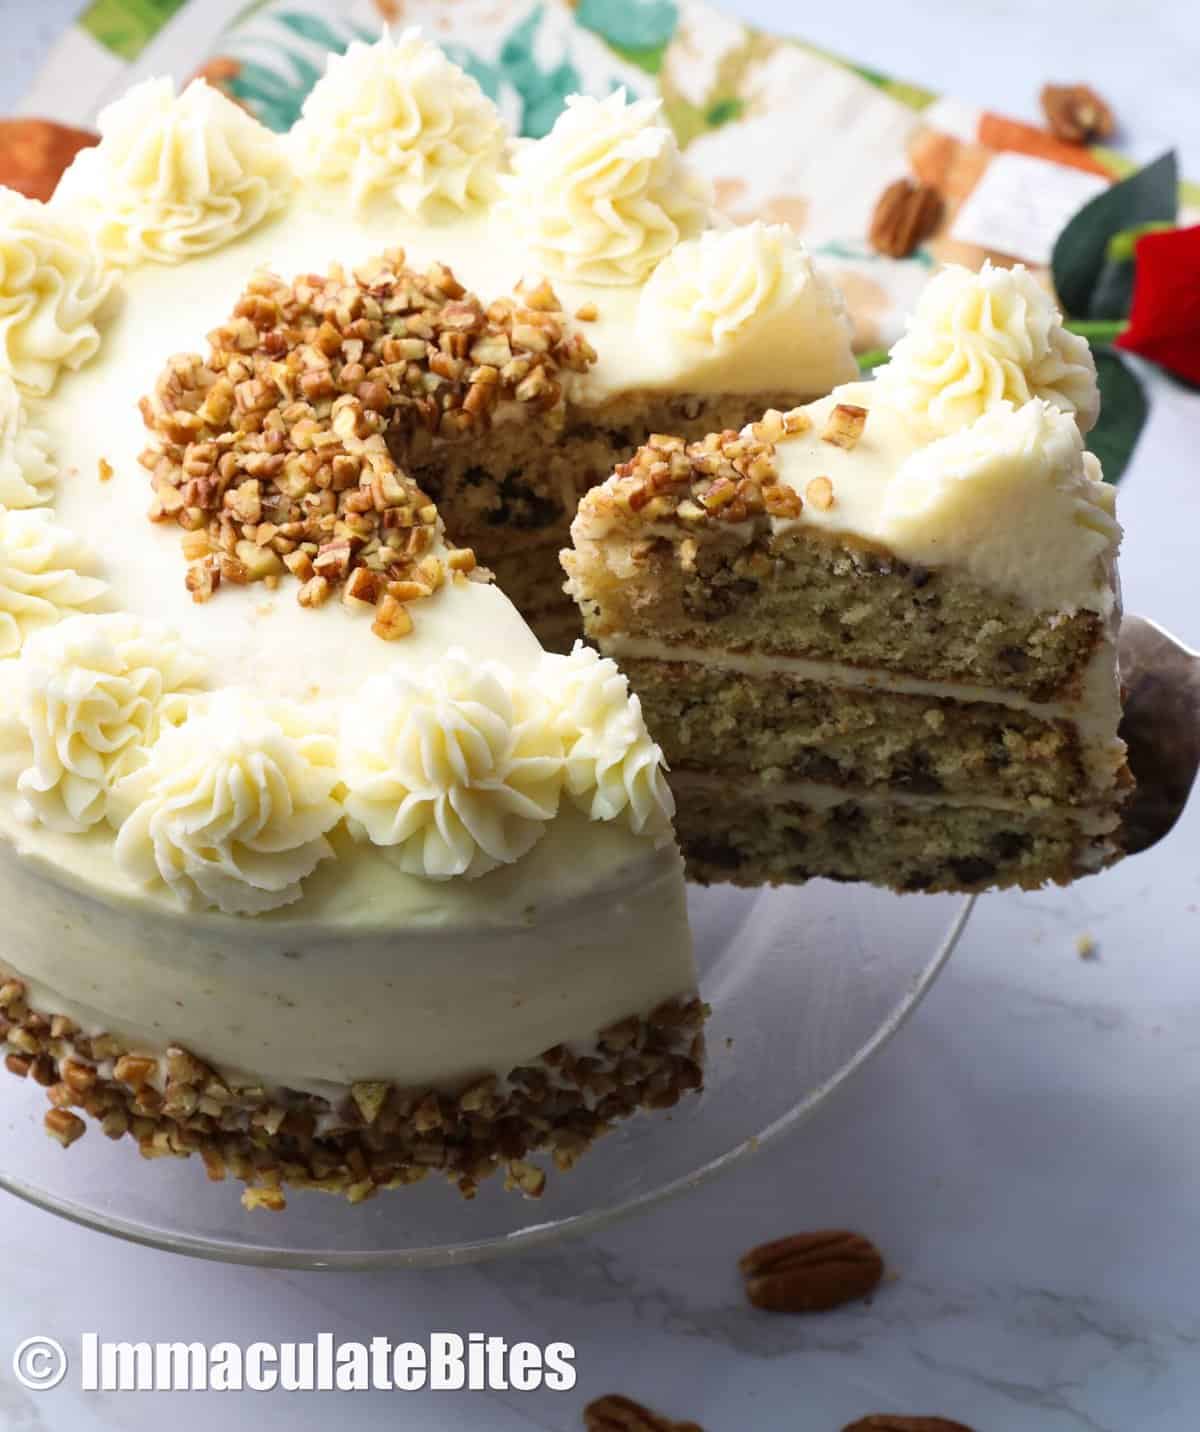 Take slices from Italian cream cake